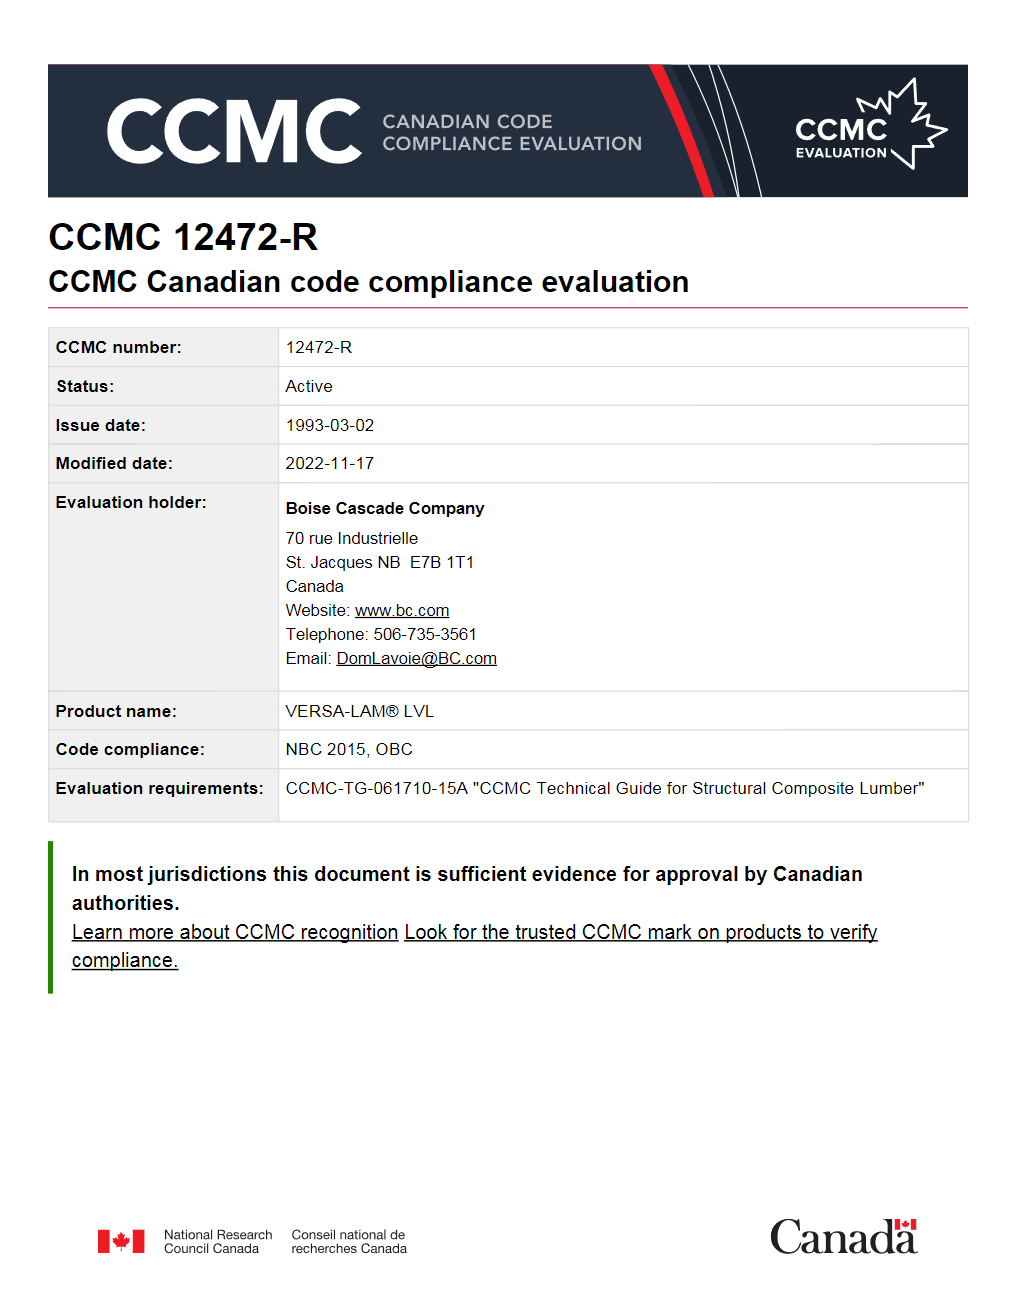 CCMC Canadian Code Compliance Evaluation